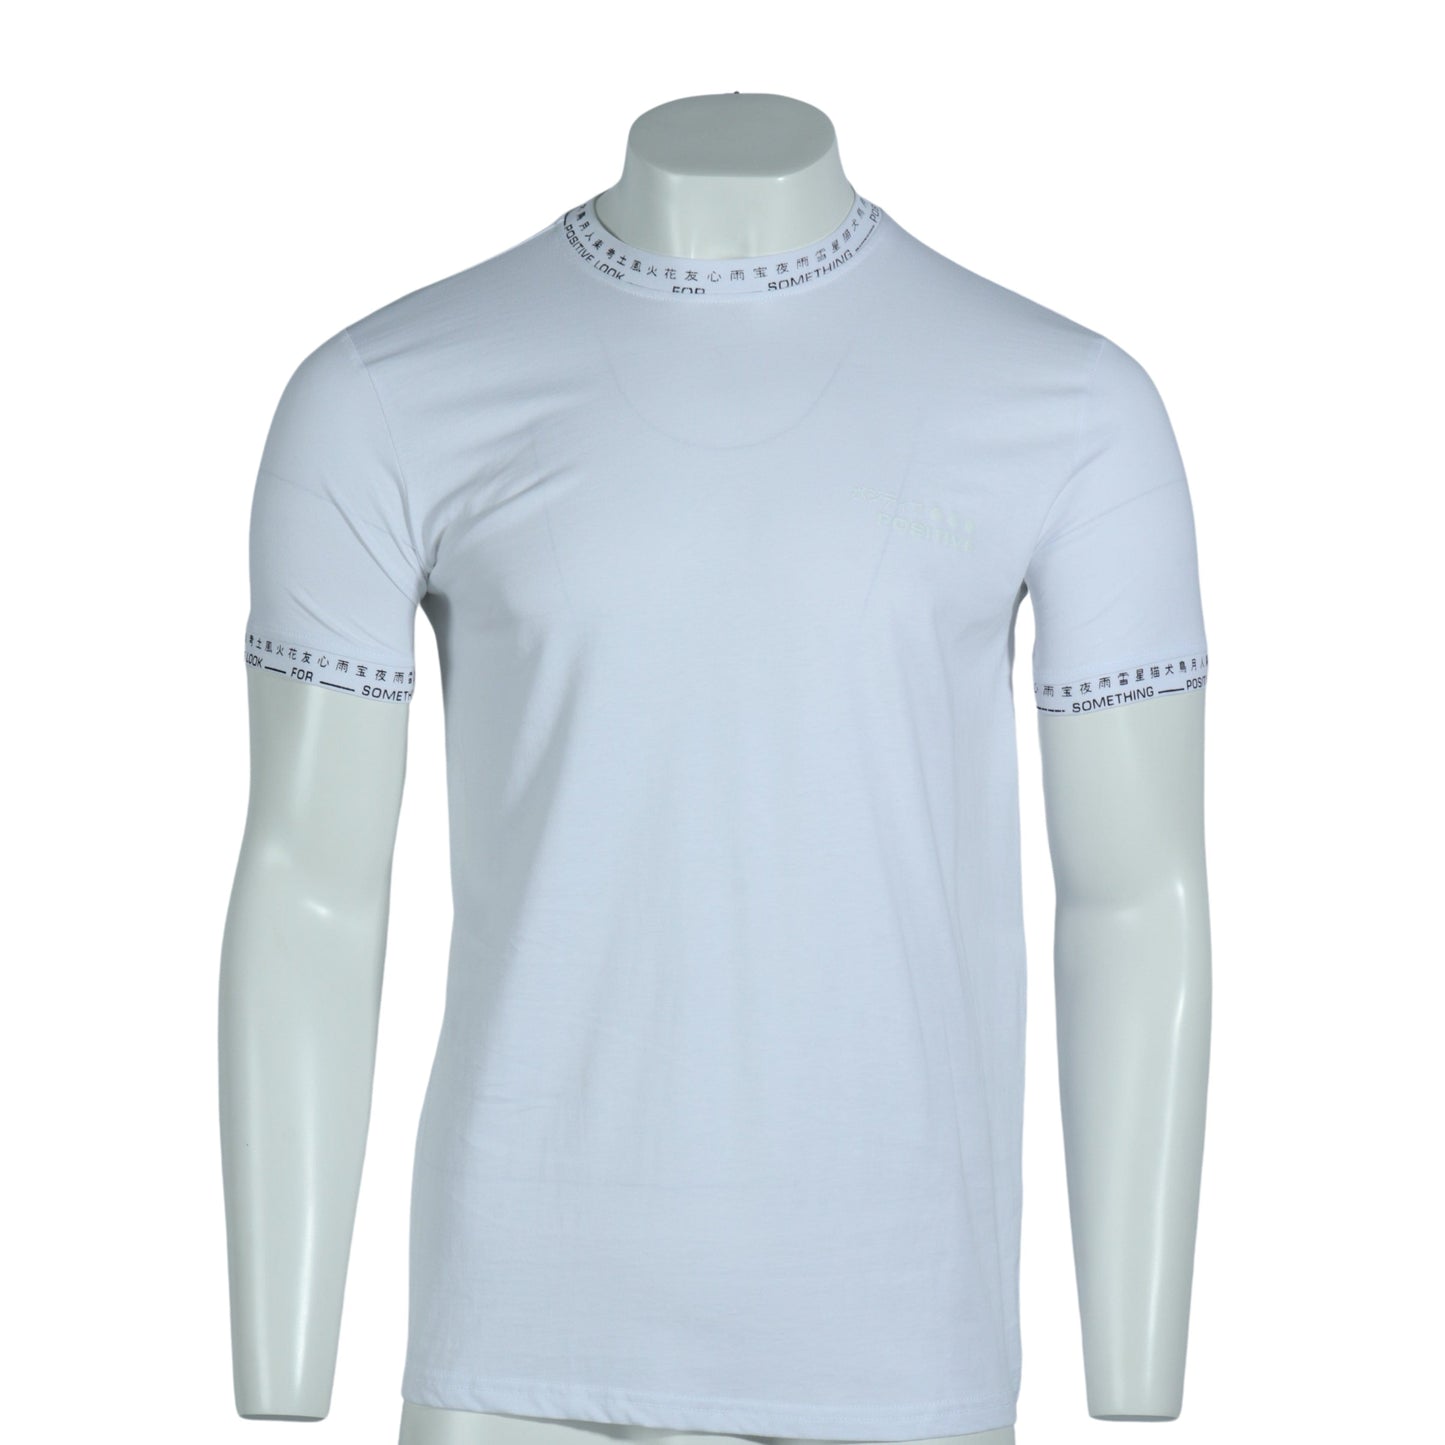 DYNAMO Mens Tops M / White DYNAMO - Printed Cuffs And Neckline T-Shirt